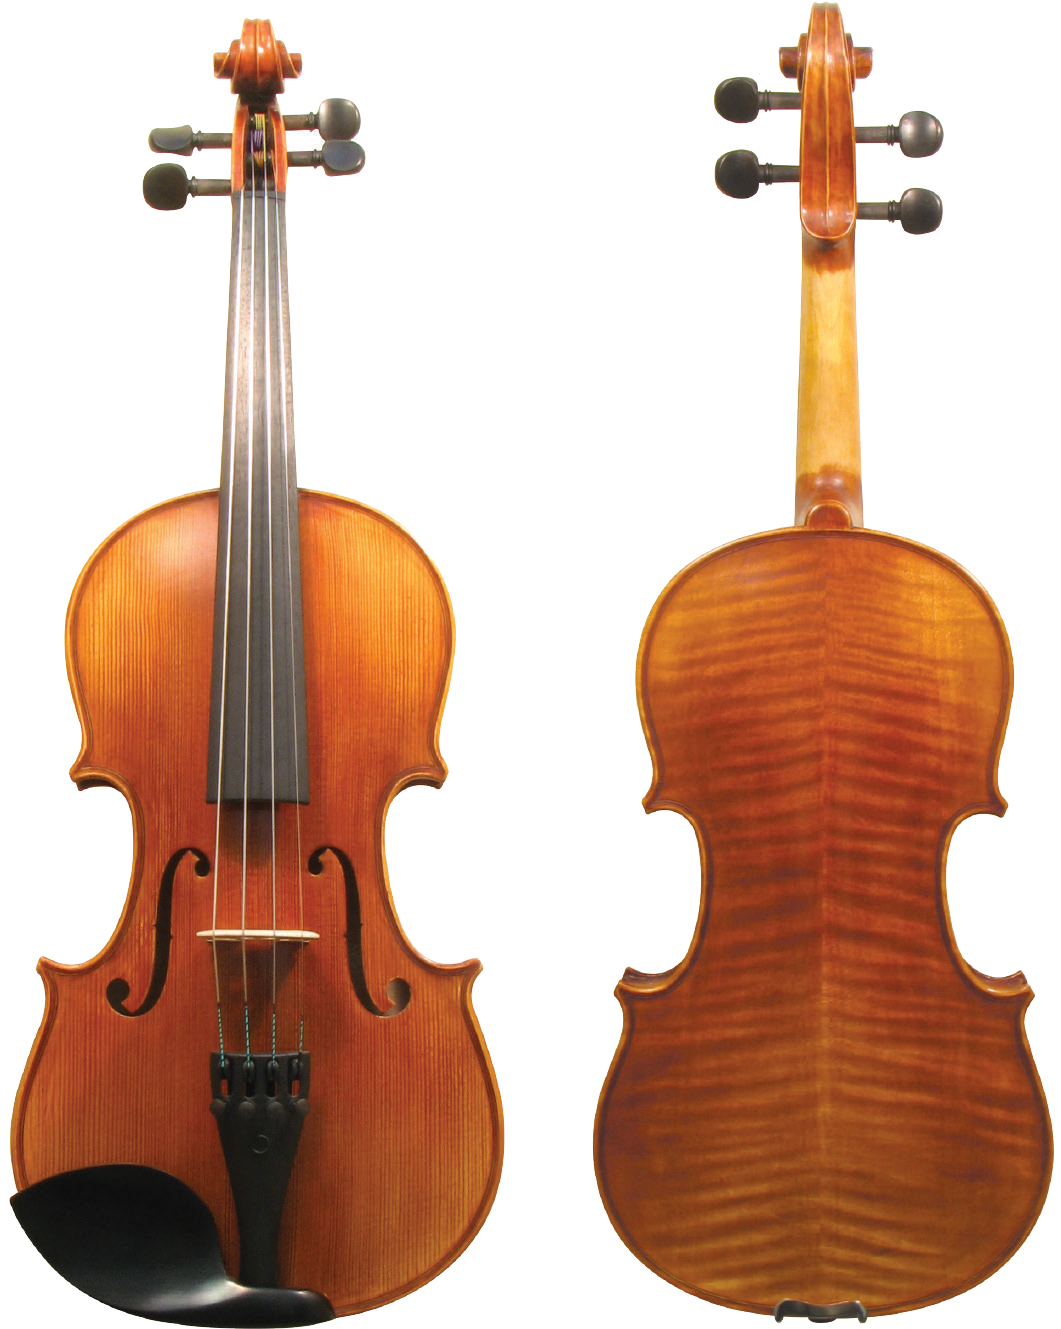 Prodigio violin